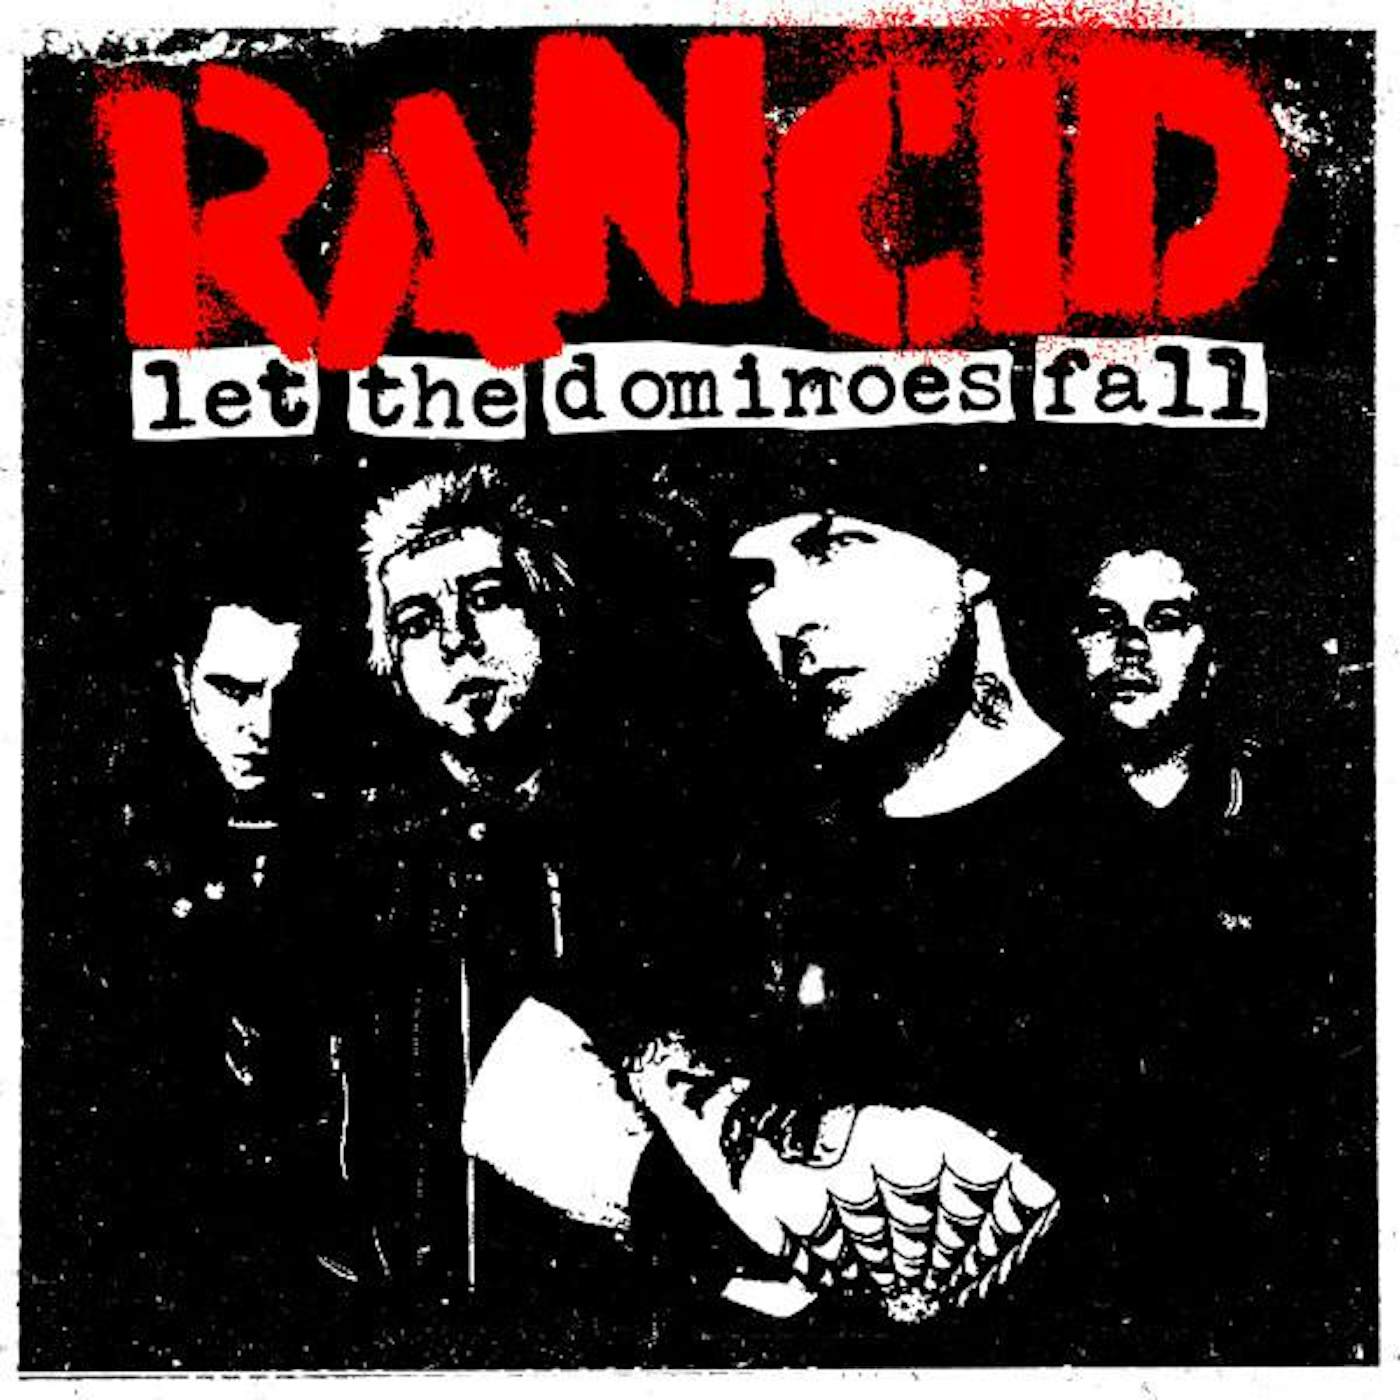 Rancid LET THE DOMINOES FALL Vinyl Record